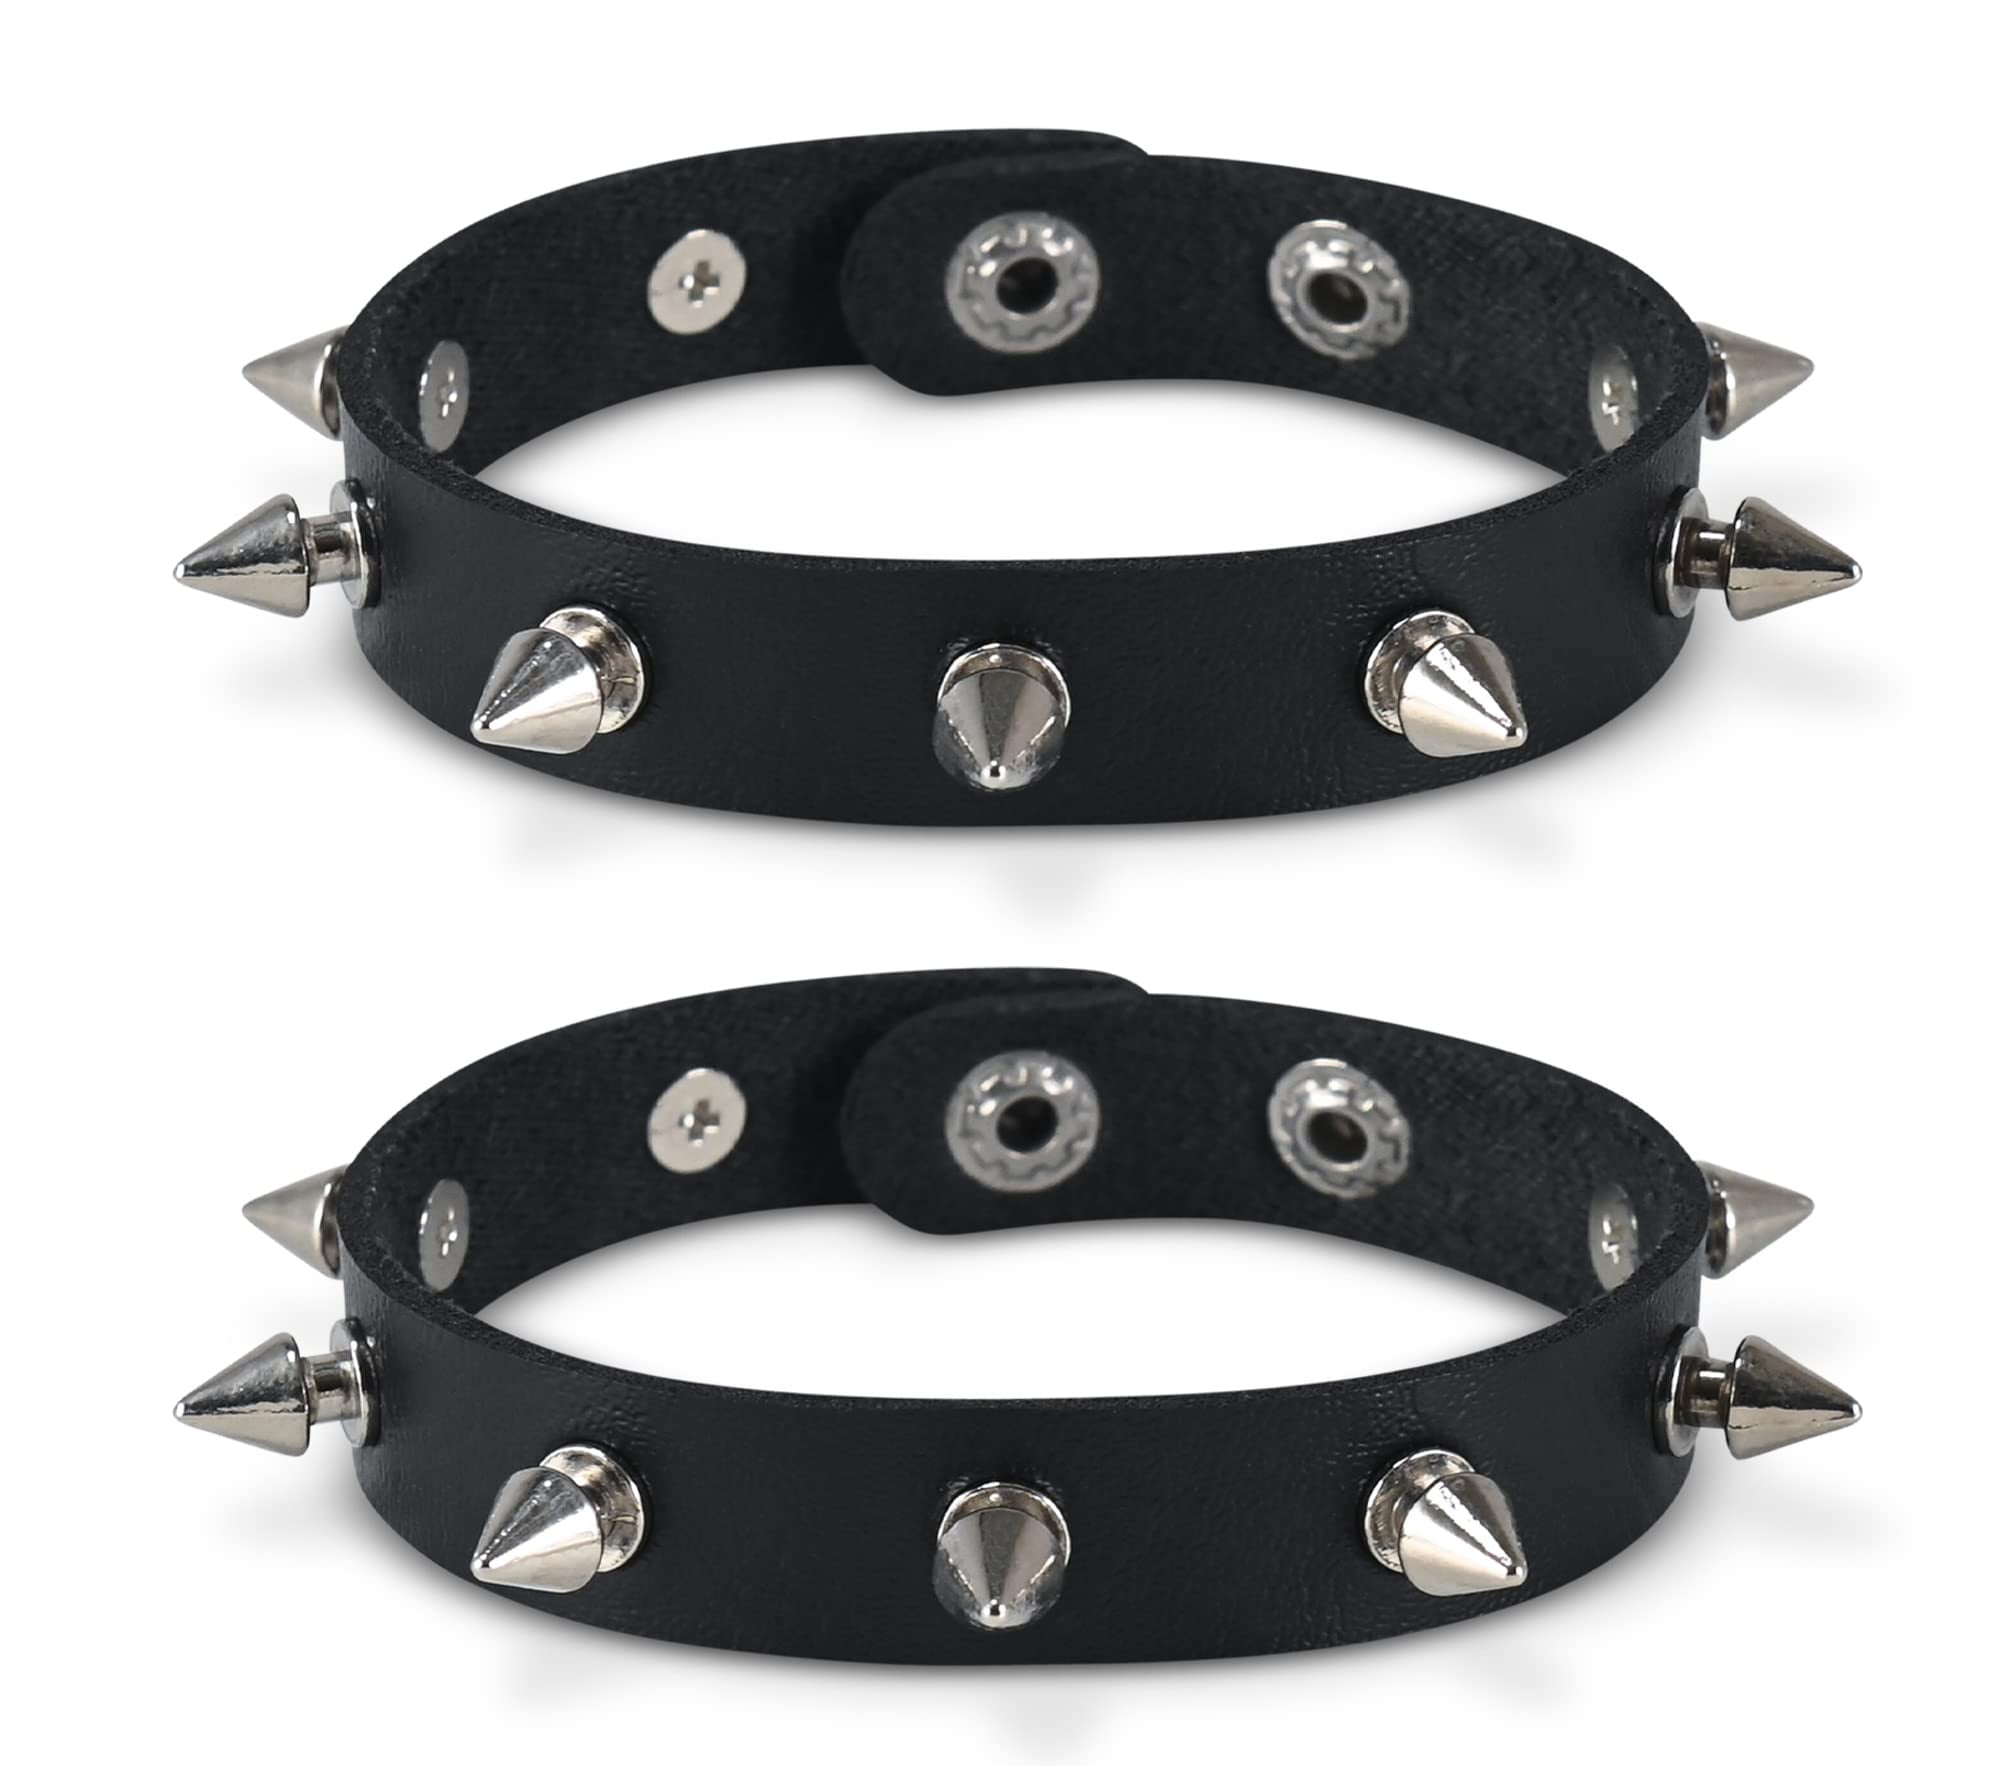 Skeleteen Punk Leather Spike Bracelet - Leather Cuff Biker Bracelet with  Spikes for Men, Women and Kids